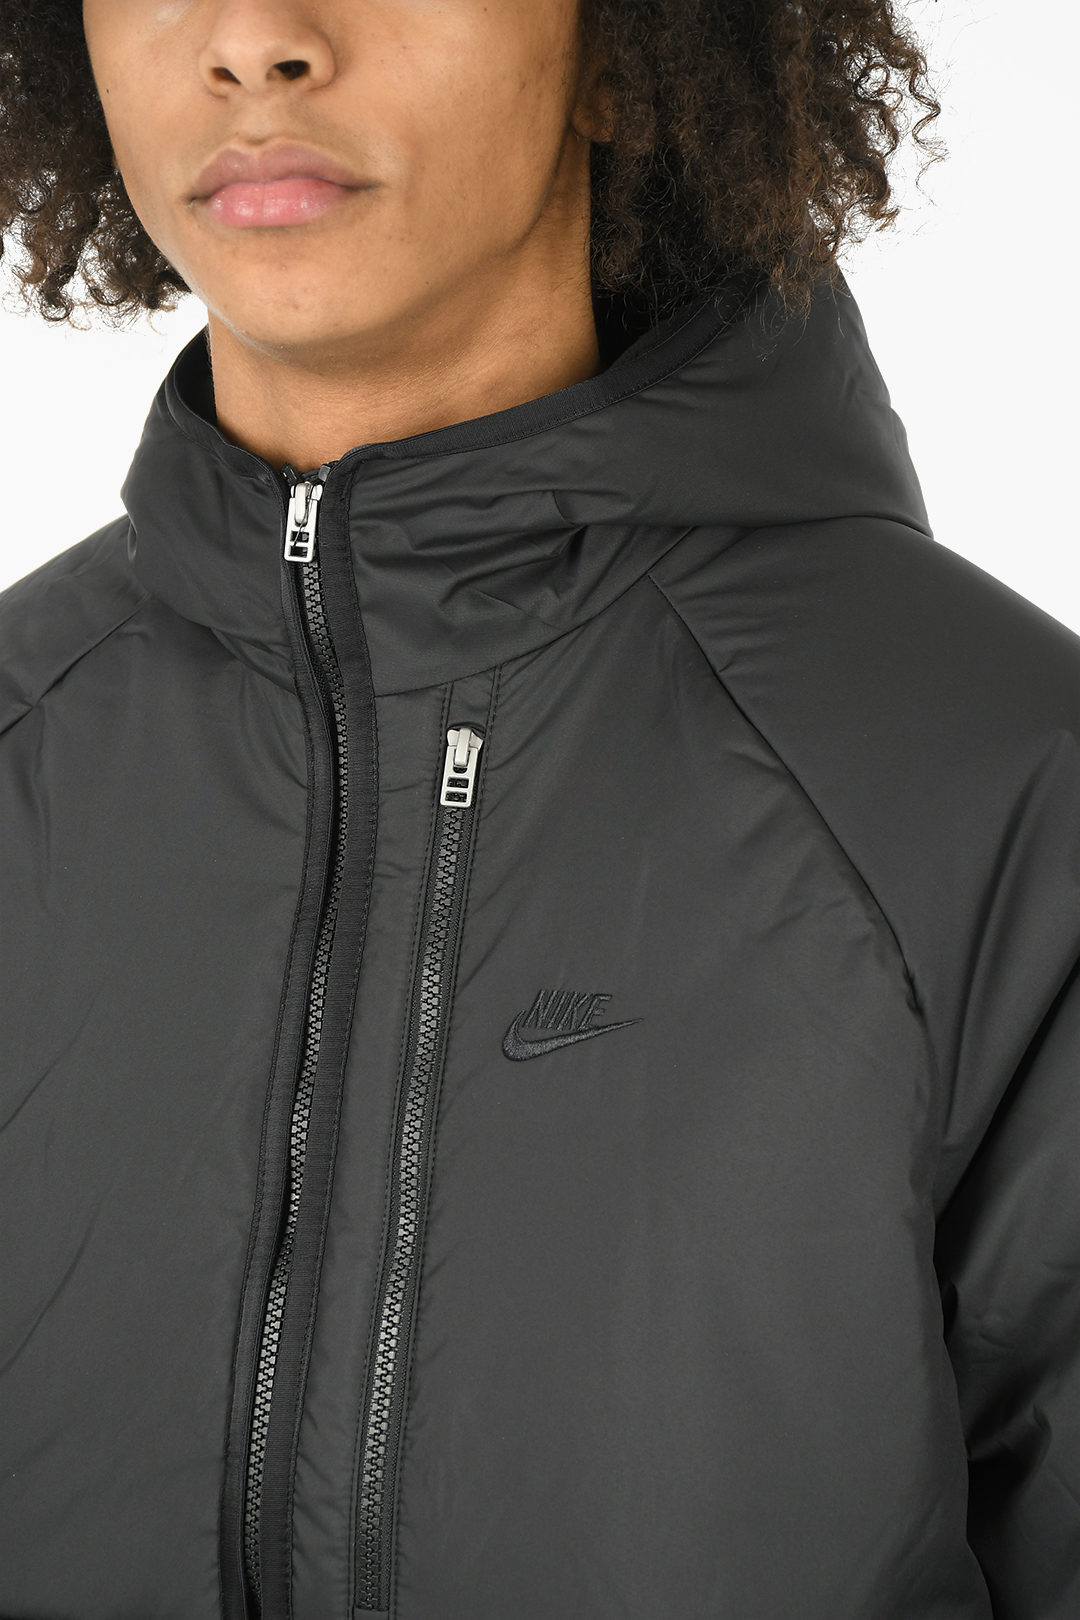 Beweging Bedrijf kleuring Nike Fleece Inner 2 Pockets LEGACY HD Jacket men - Glamood Outlet